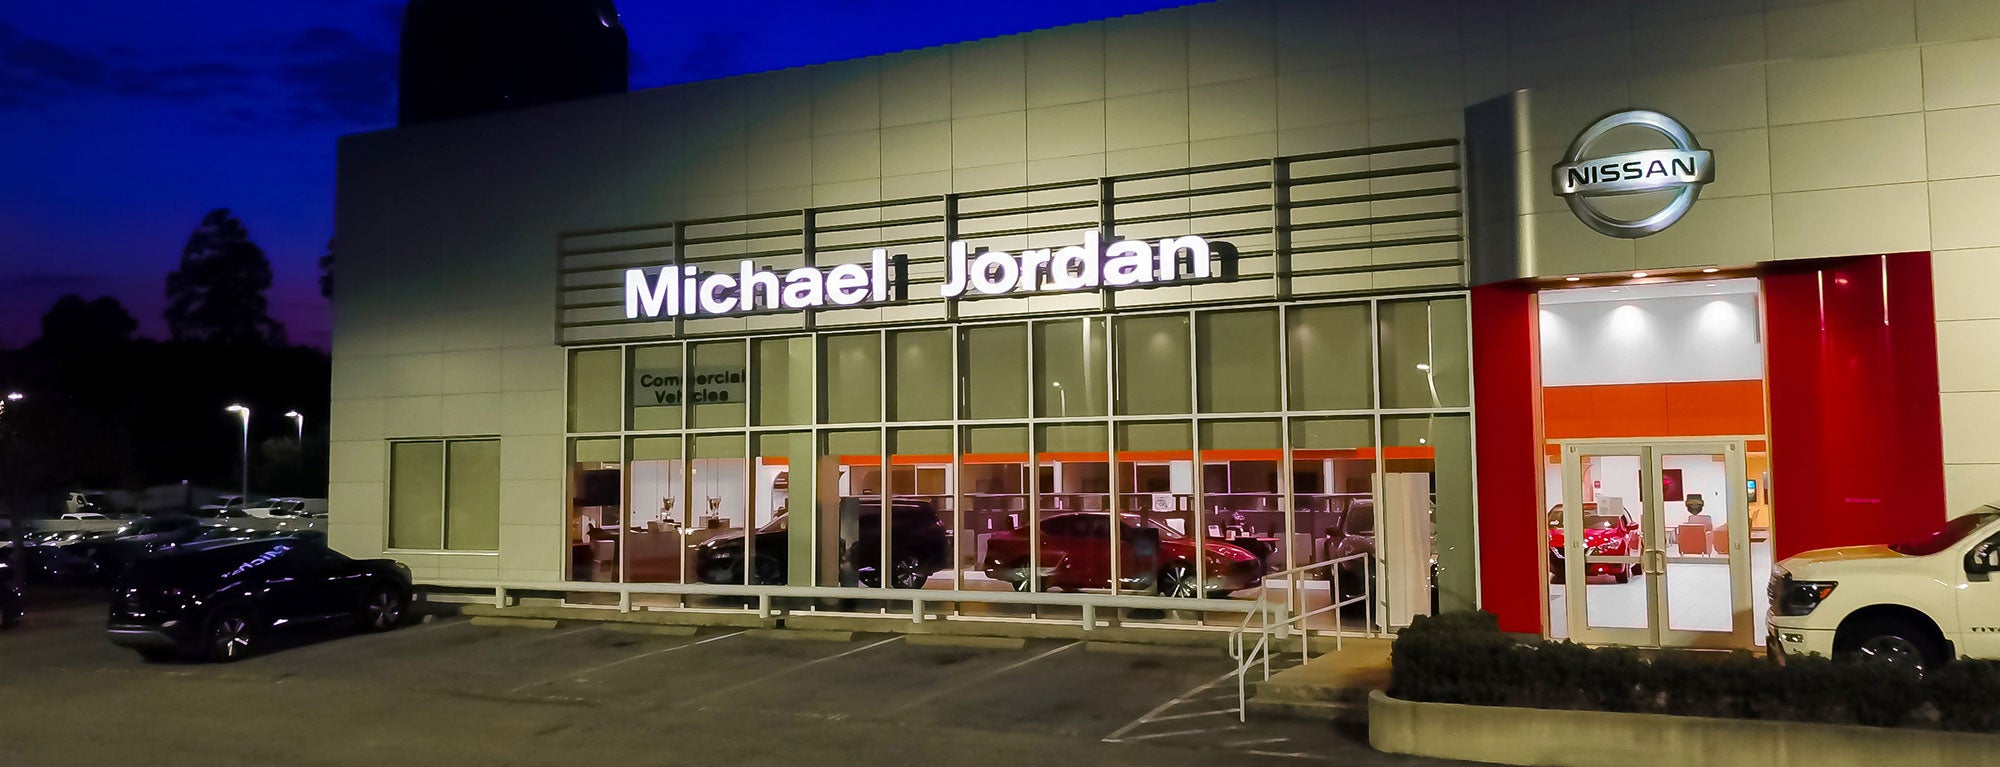 Michael Jordan Nissan storefront at night